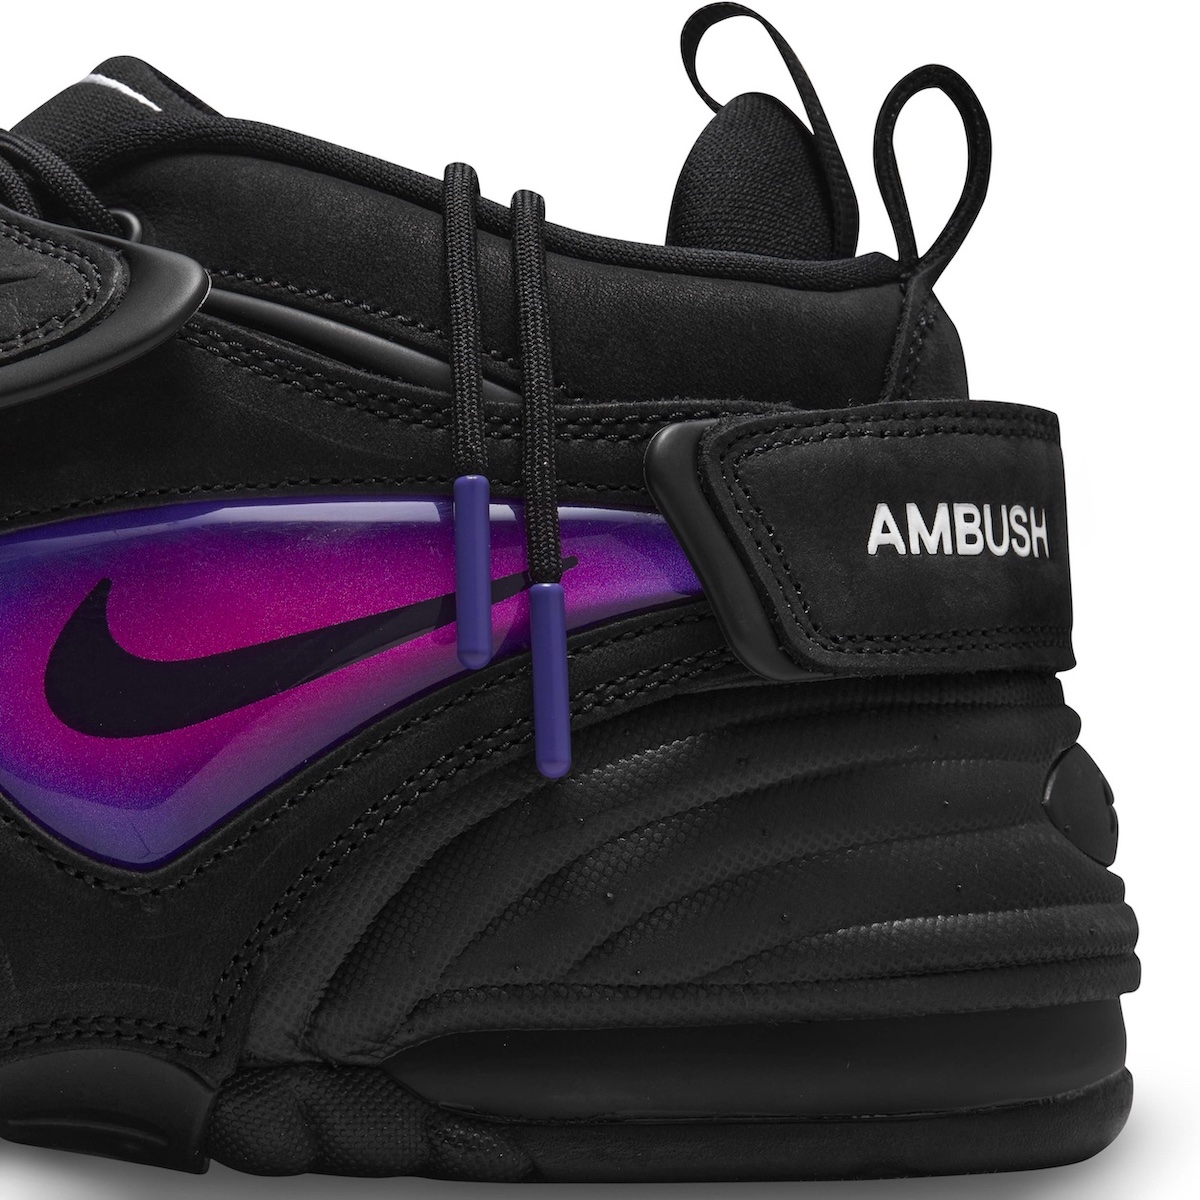 AMBUSH Nike Air Adjust Force Black DM8465-001 Release Date